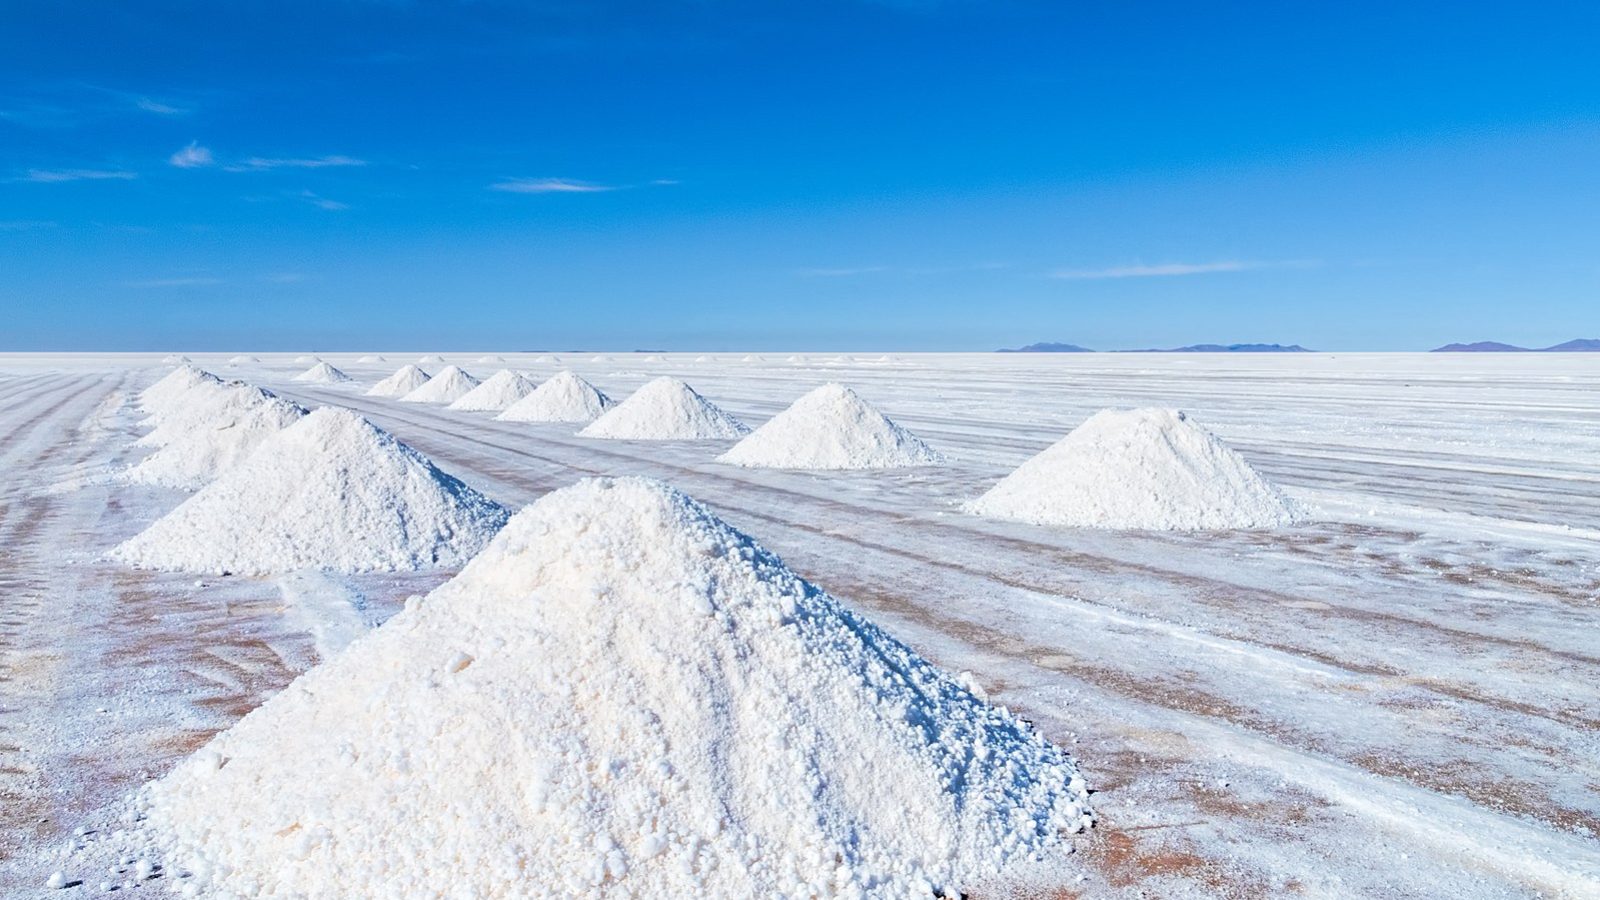 The Uyuni Salt Flat in Bolivia